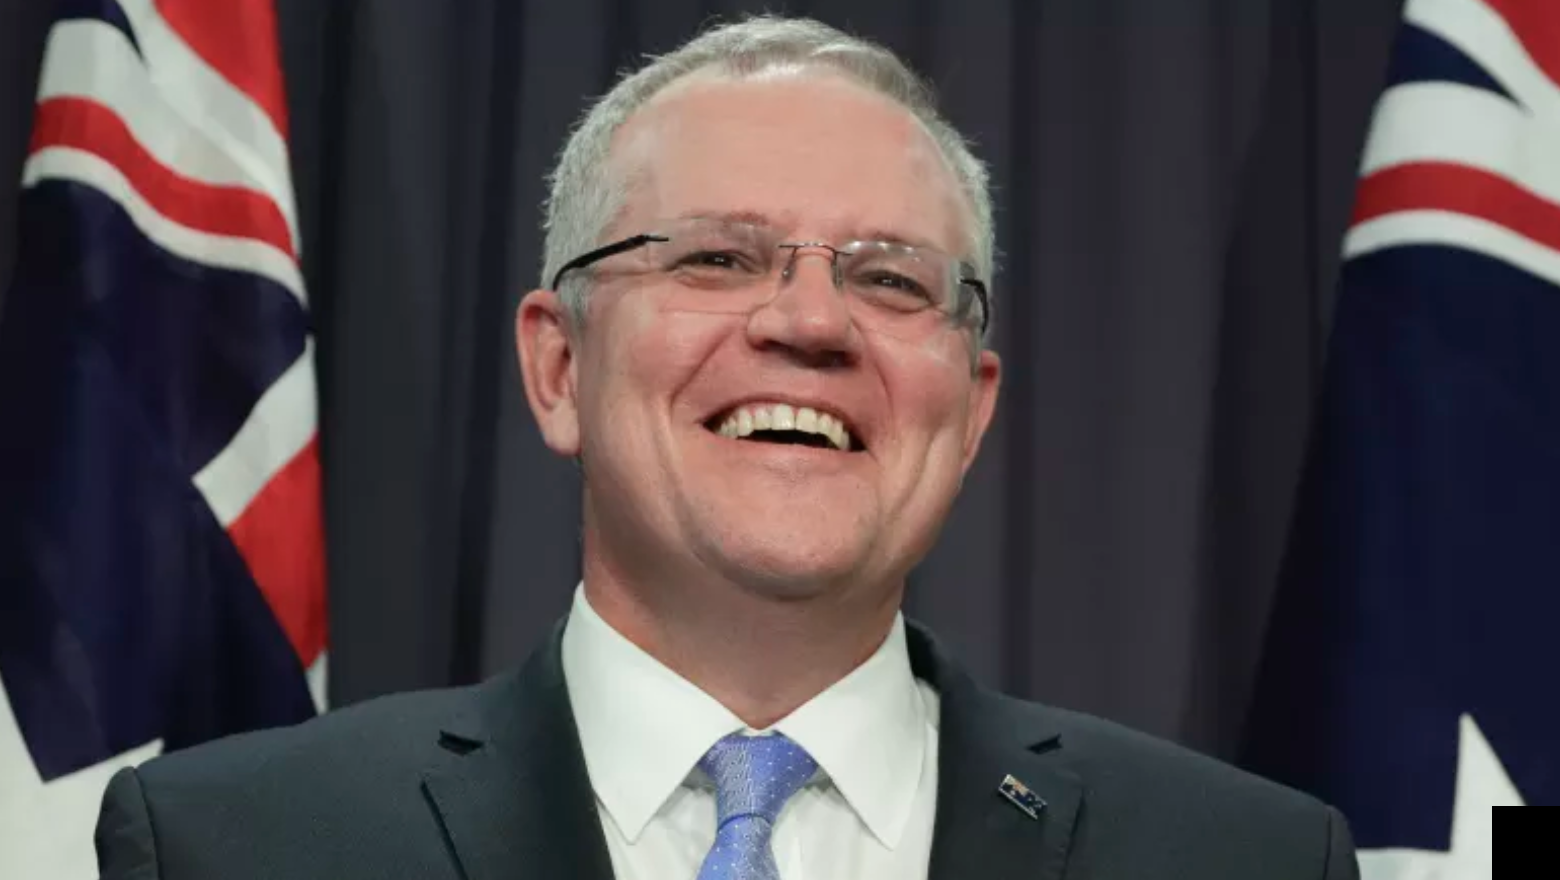 Scott Morrison is Australia’s 30th Prime Minister